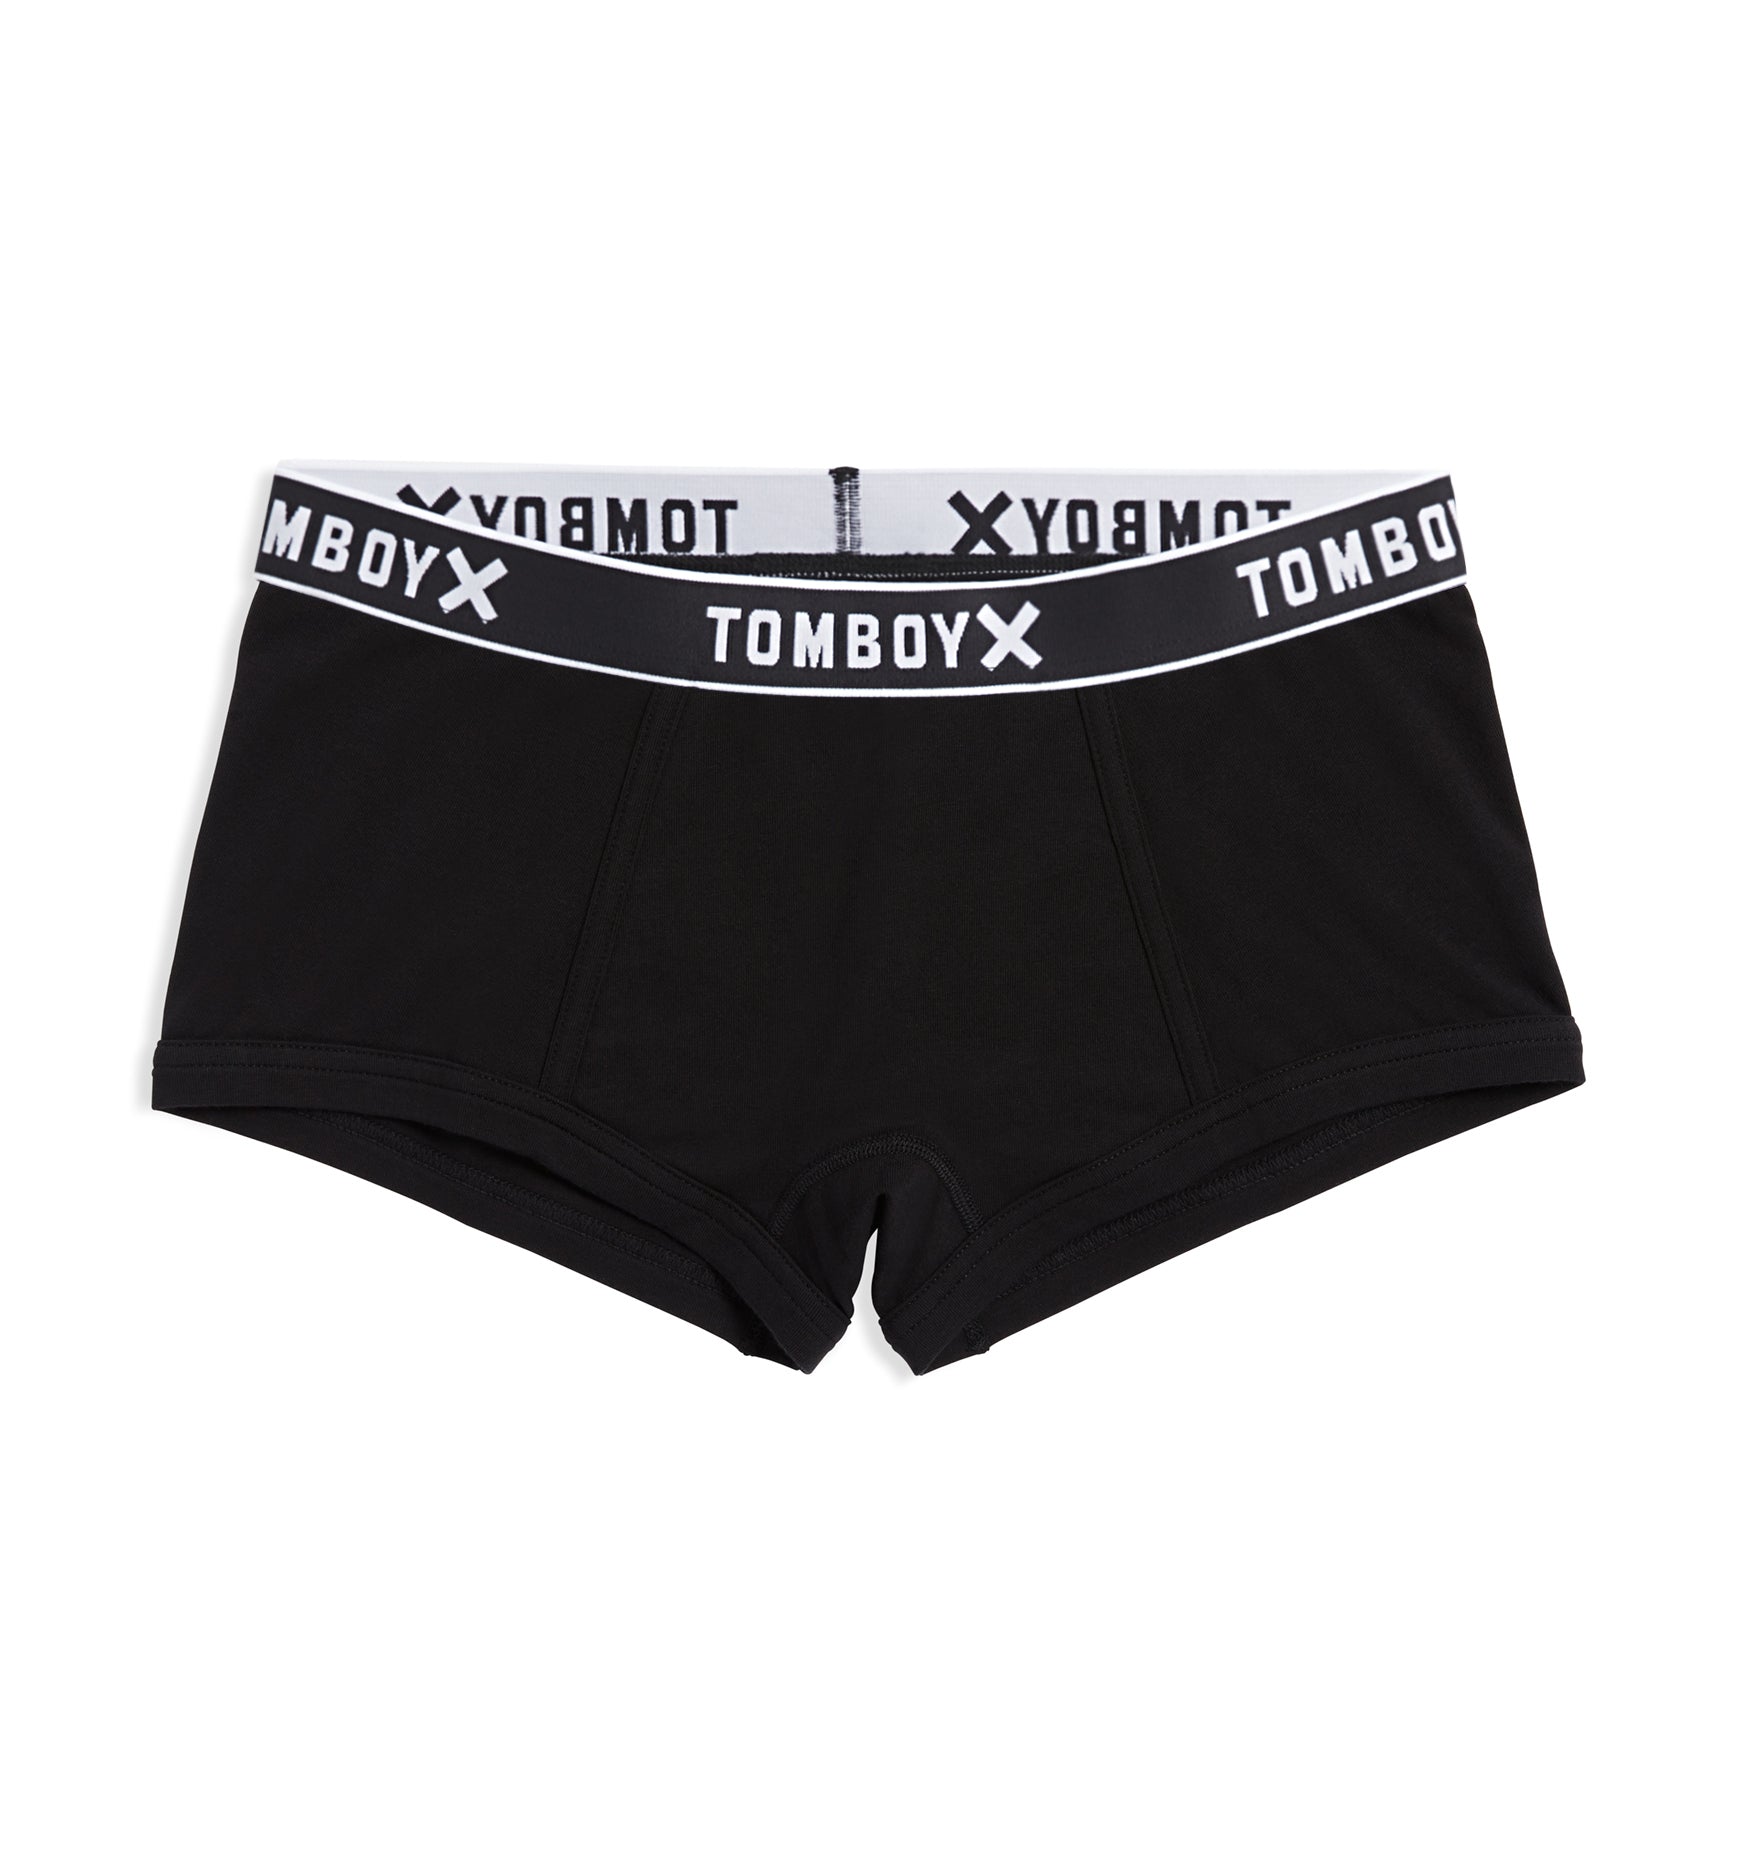 Oddballs x Ruggette Tomboy Boxer Short-Ecru CLEARANCE